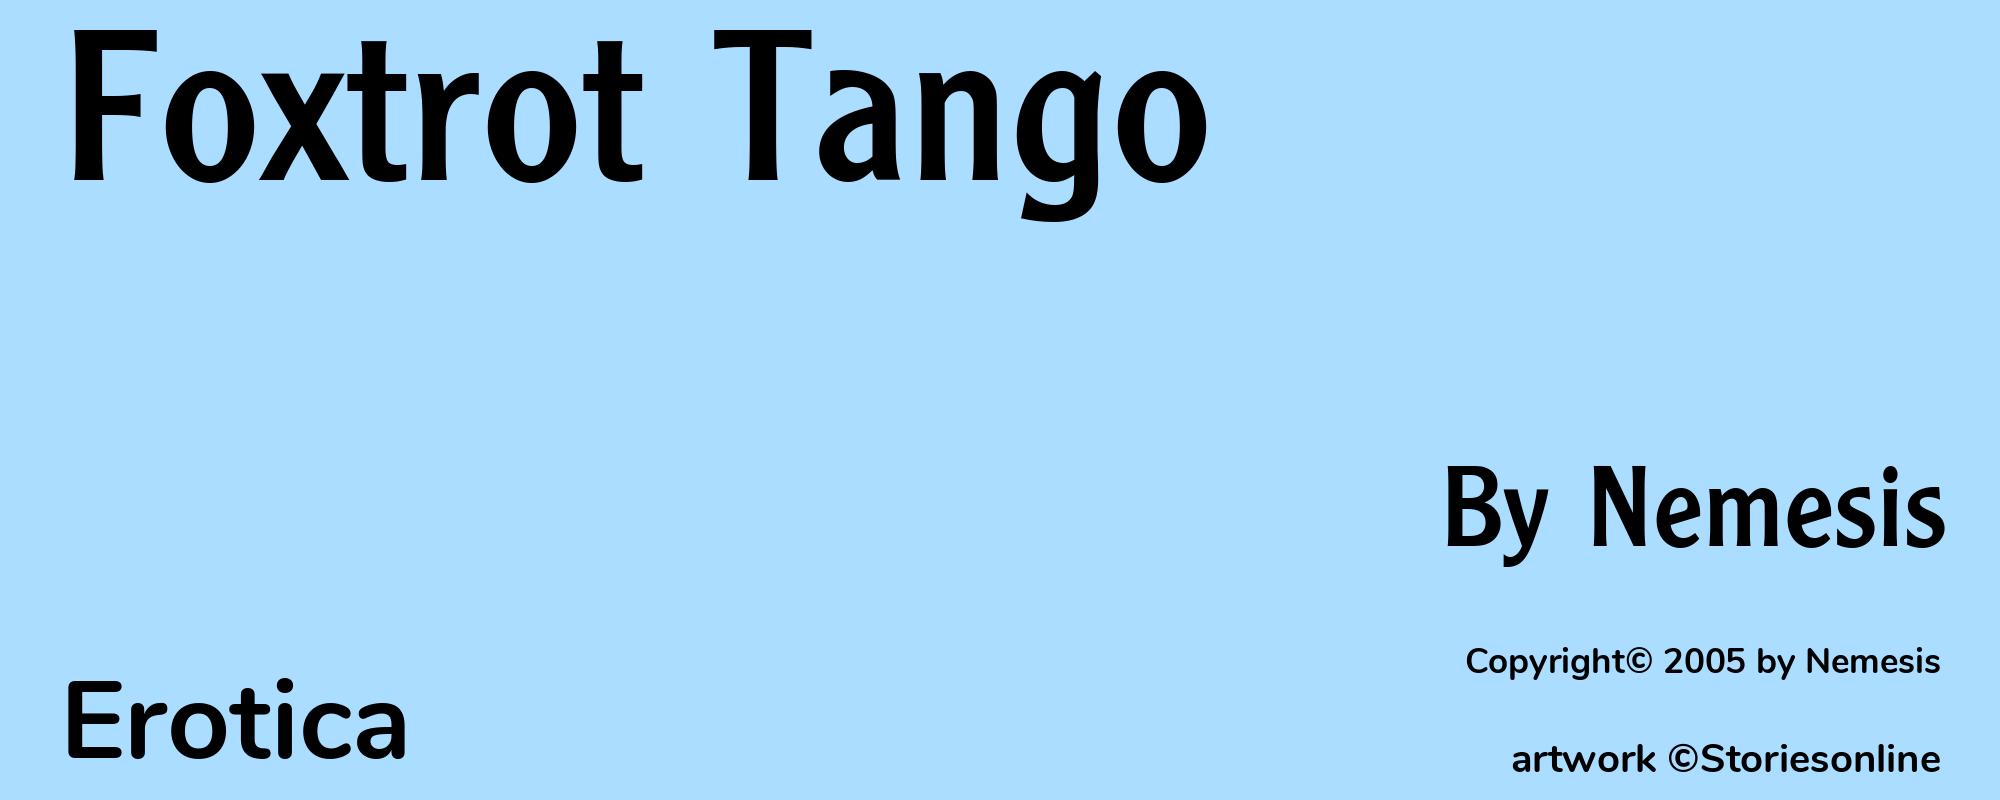 Foxtrot Tango - Cover